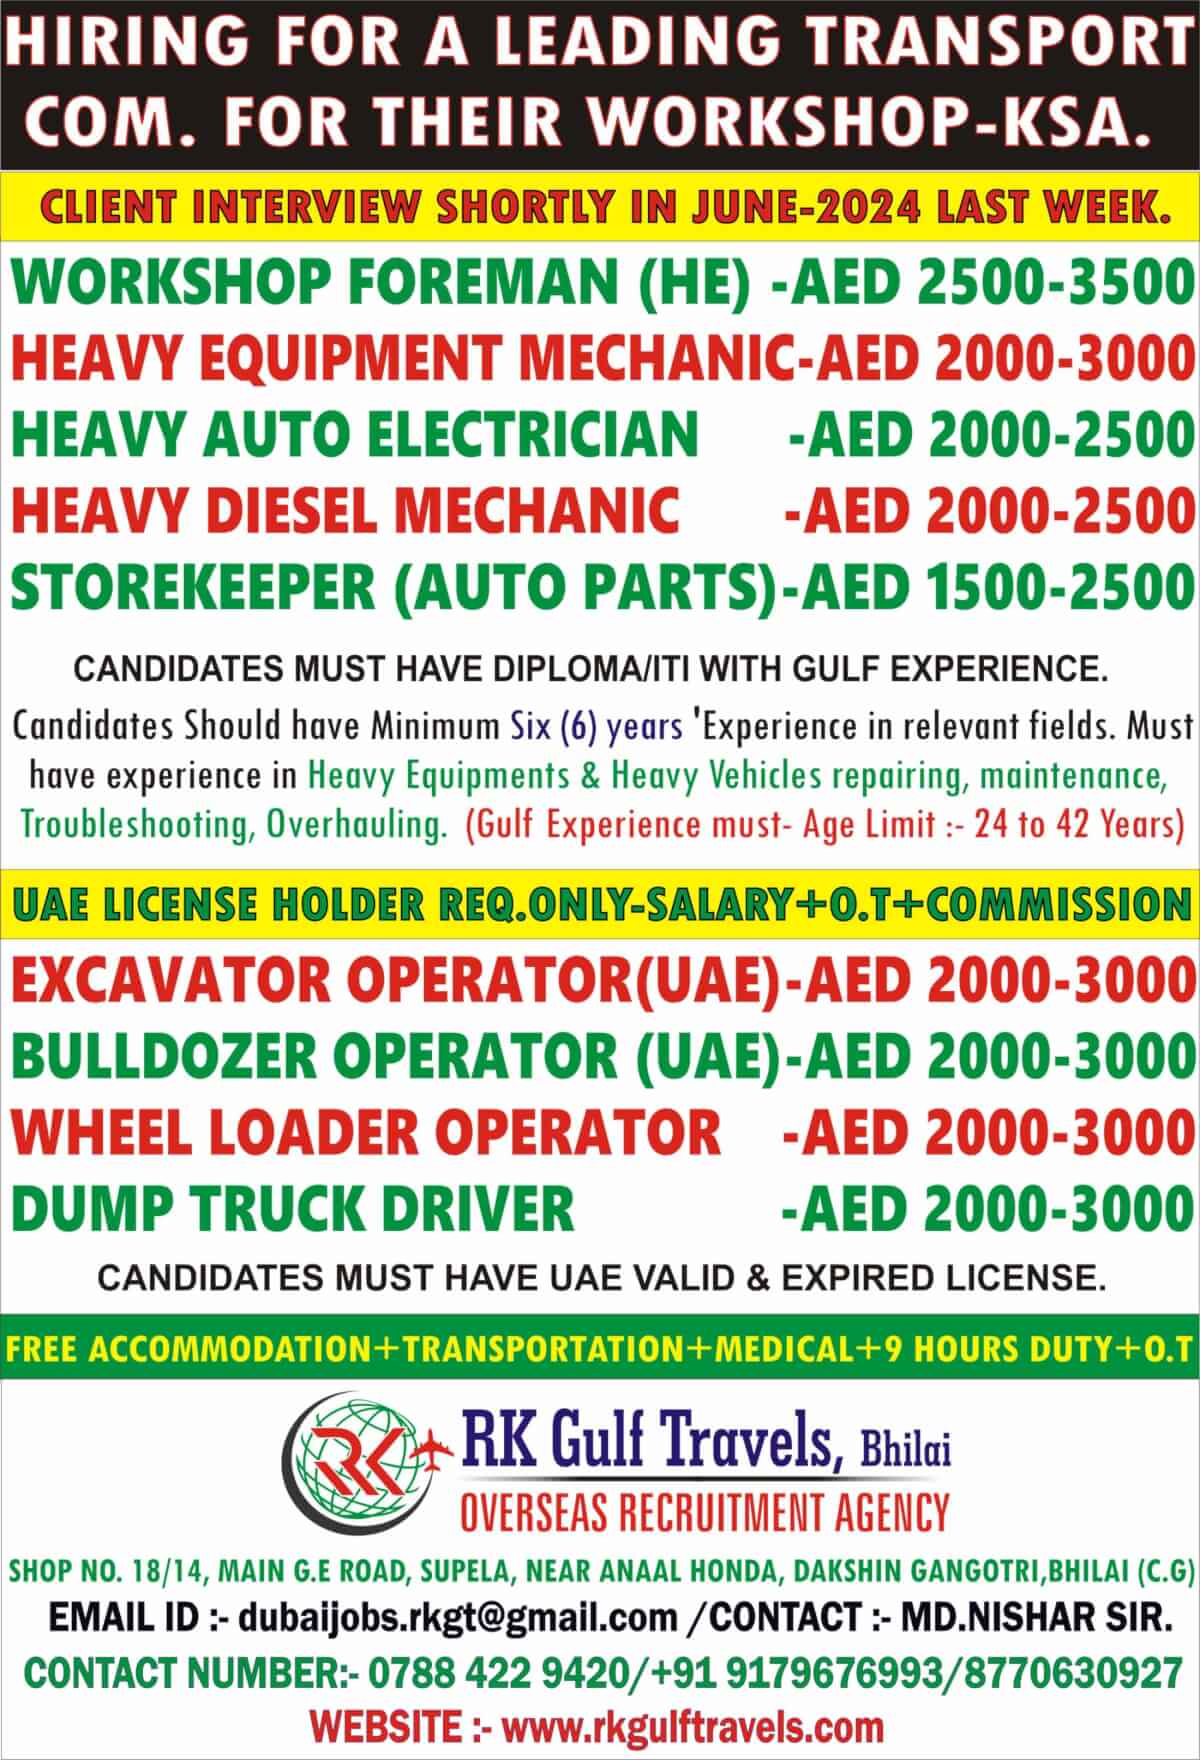 HIRING FOR A LEADING TRANSPORT COMPANY - ABU DHABI (UAE)